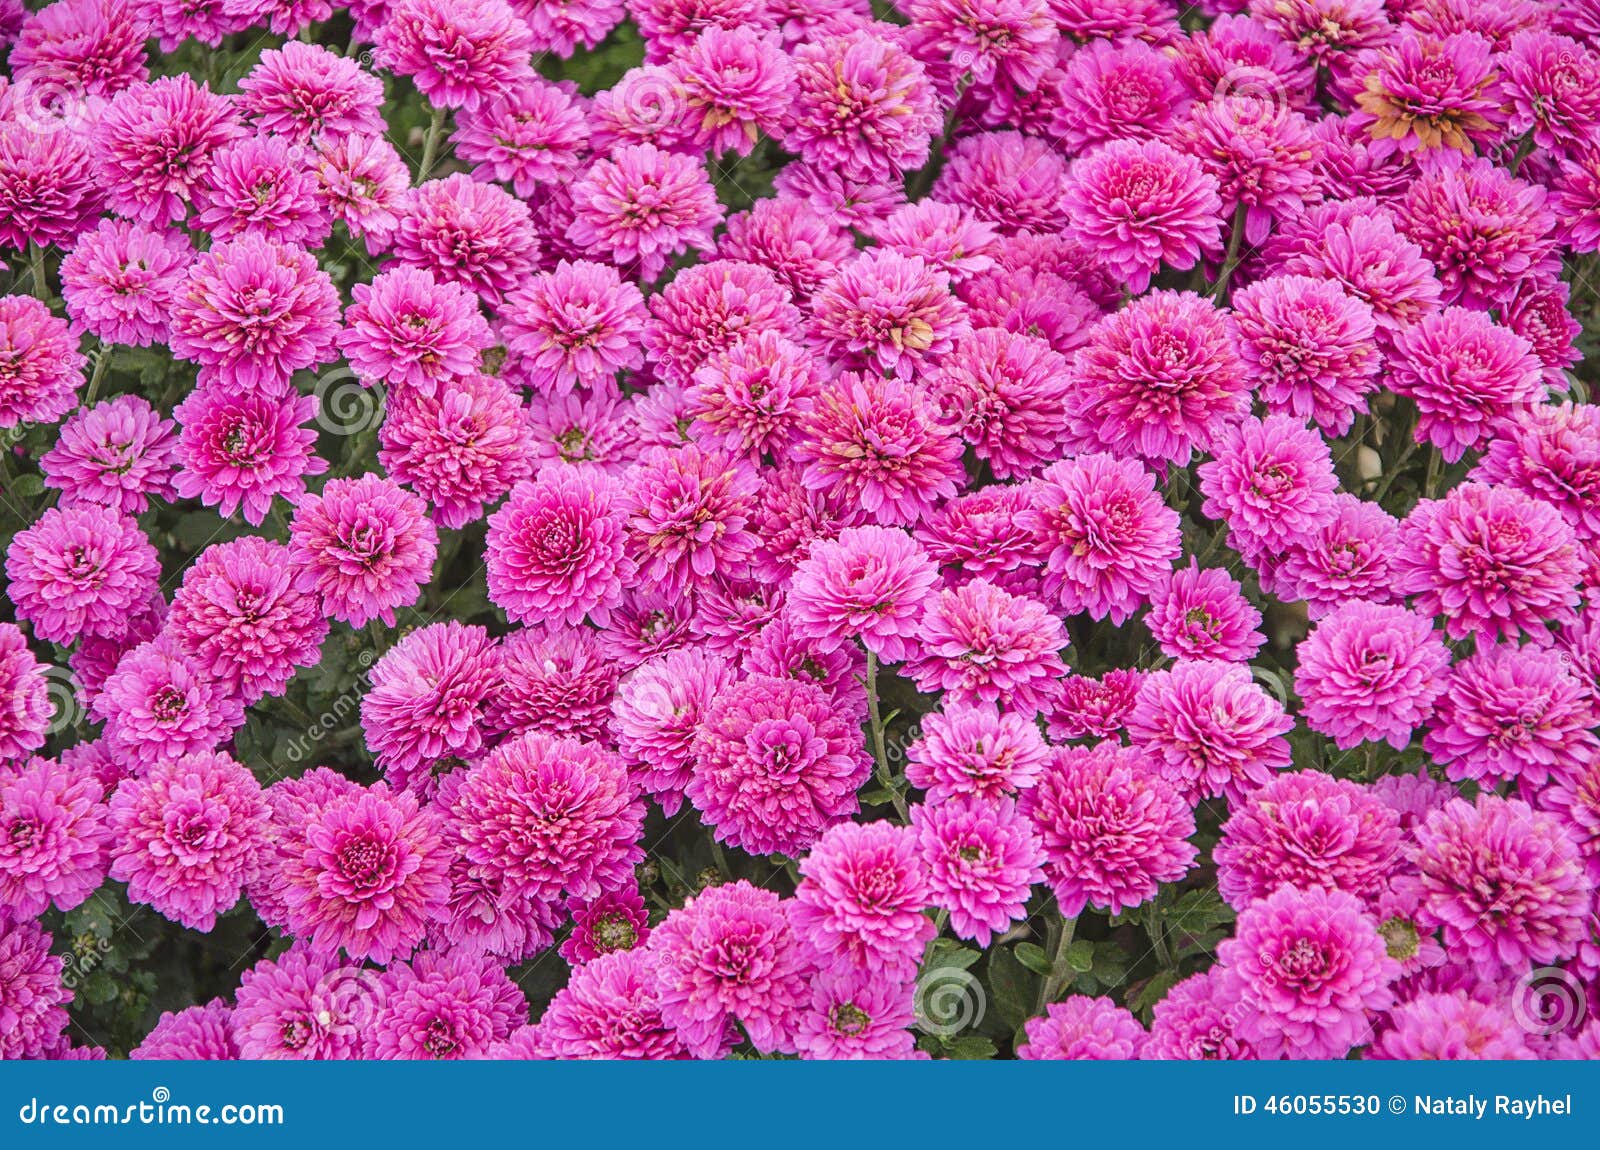 Chrysanthemum stock photo. Image of ethereal, choice - 46055530